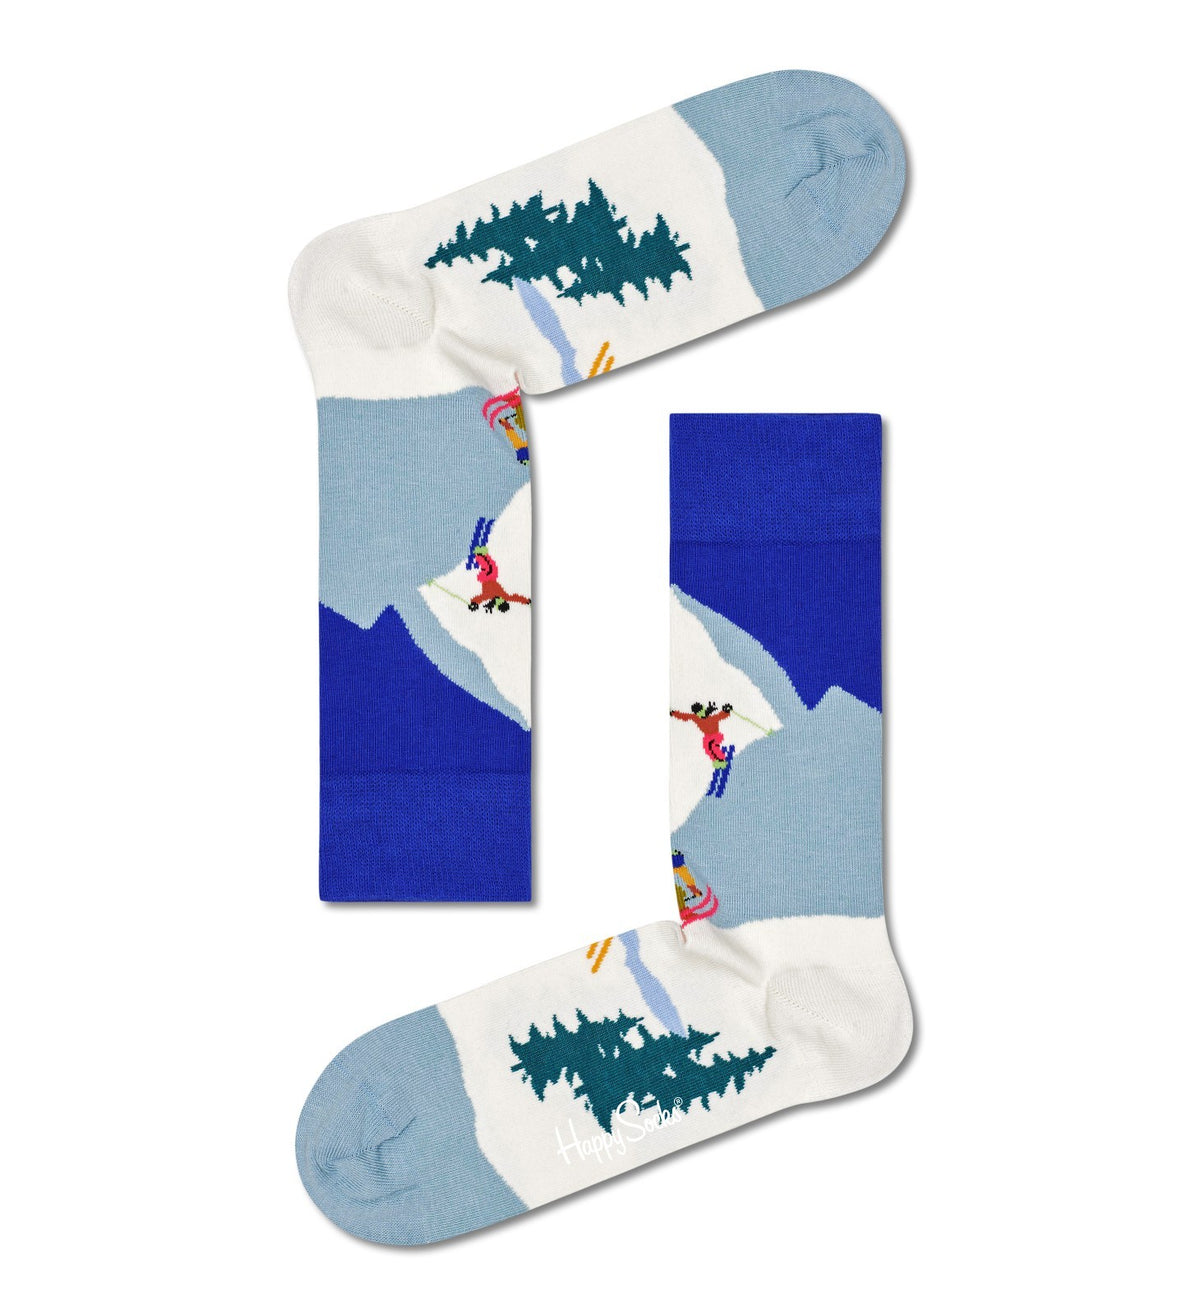 Downhill Skiing Sock SDSS01